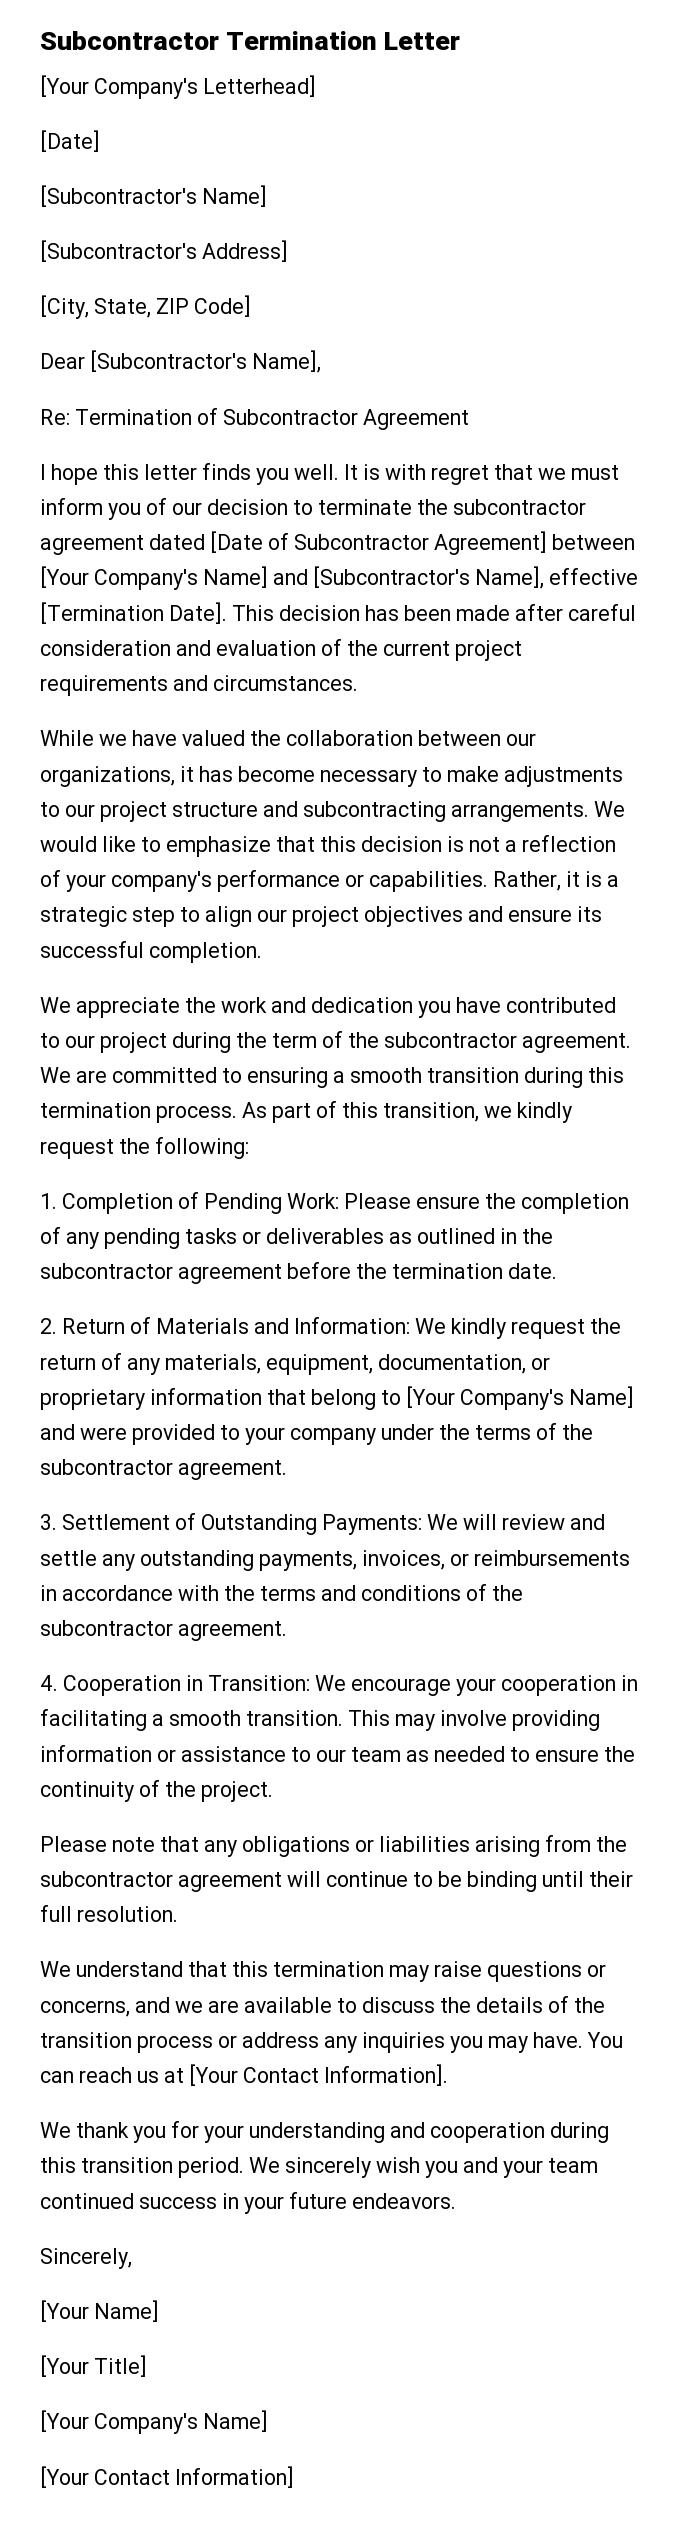 Subcontractor Termination Letter